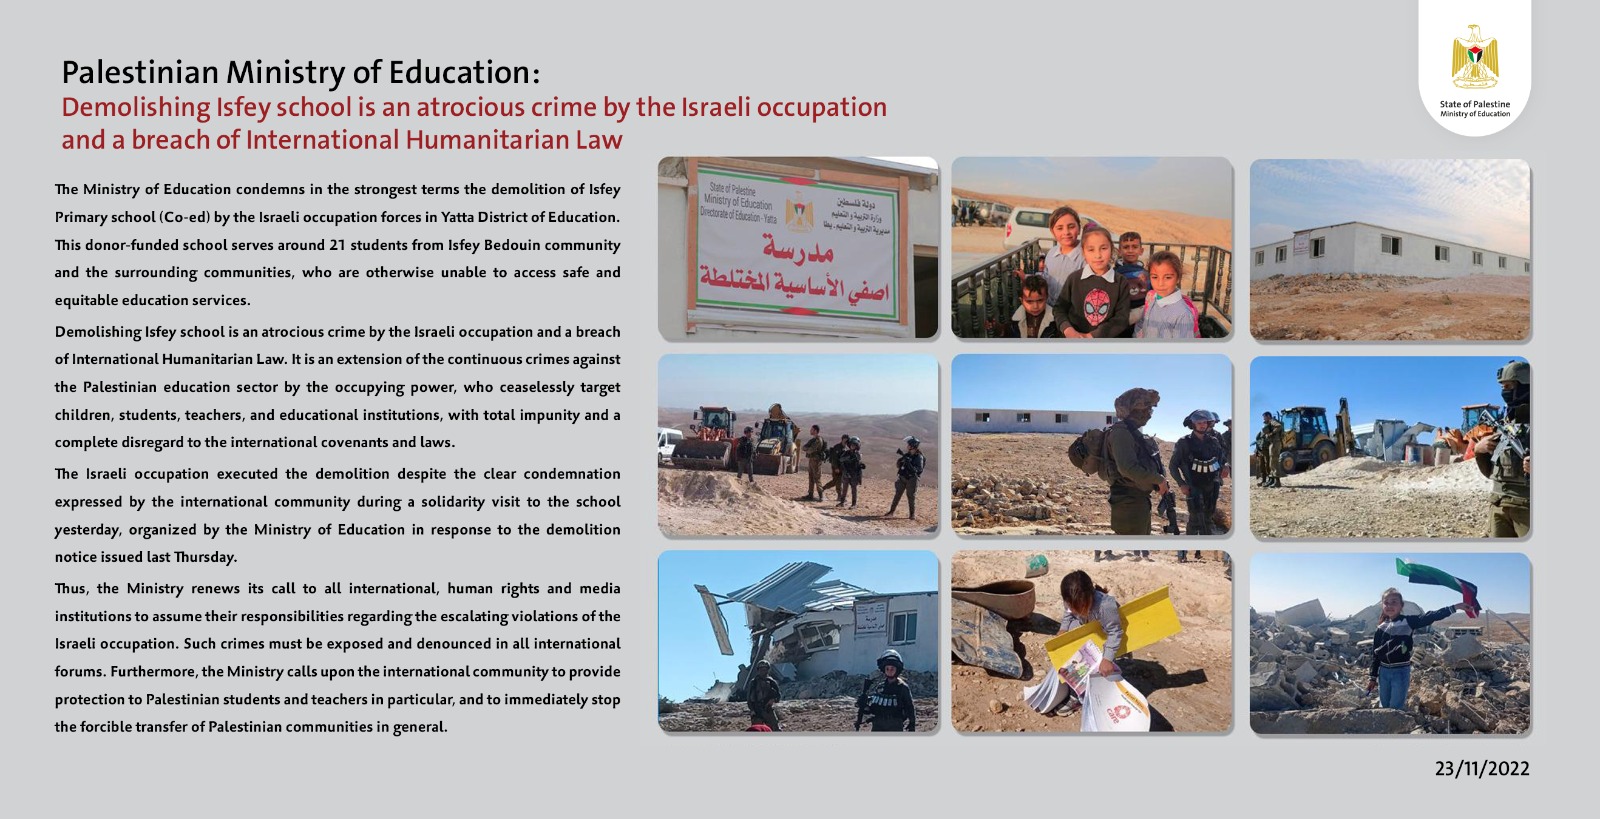 Demolishing Isfey school is an atrocious crime by the Israeli occupation and a breach of International Humanitarian Law.